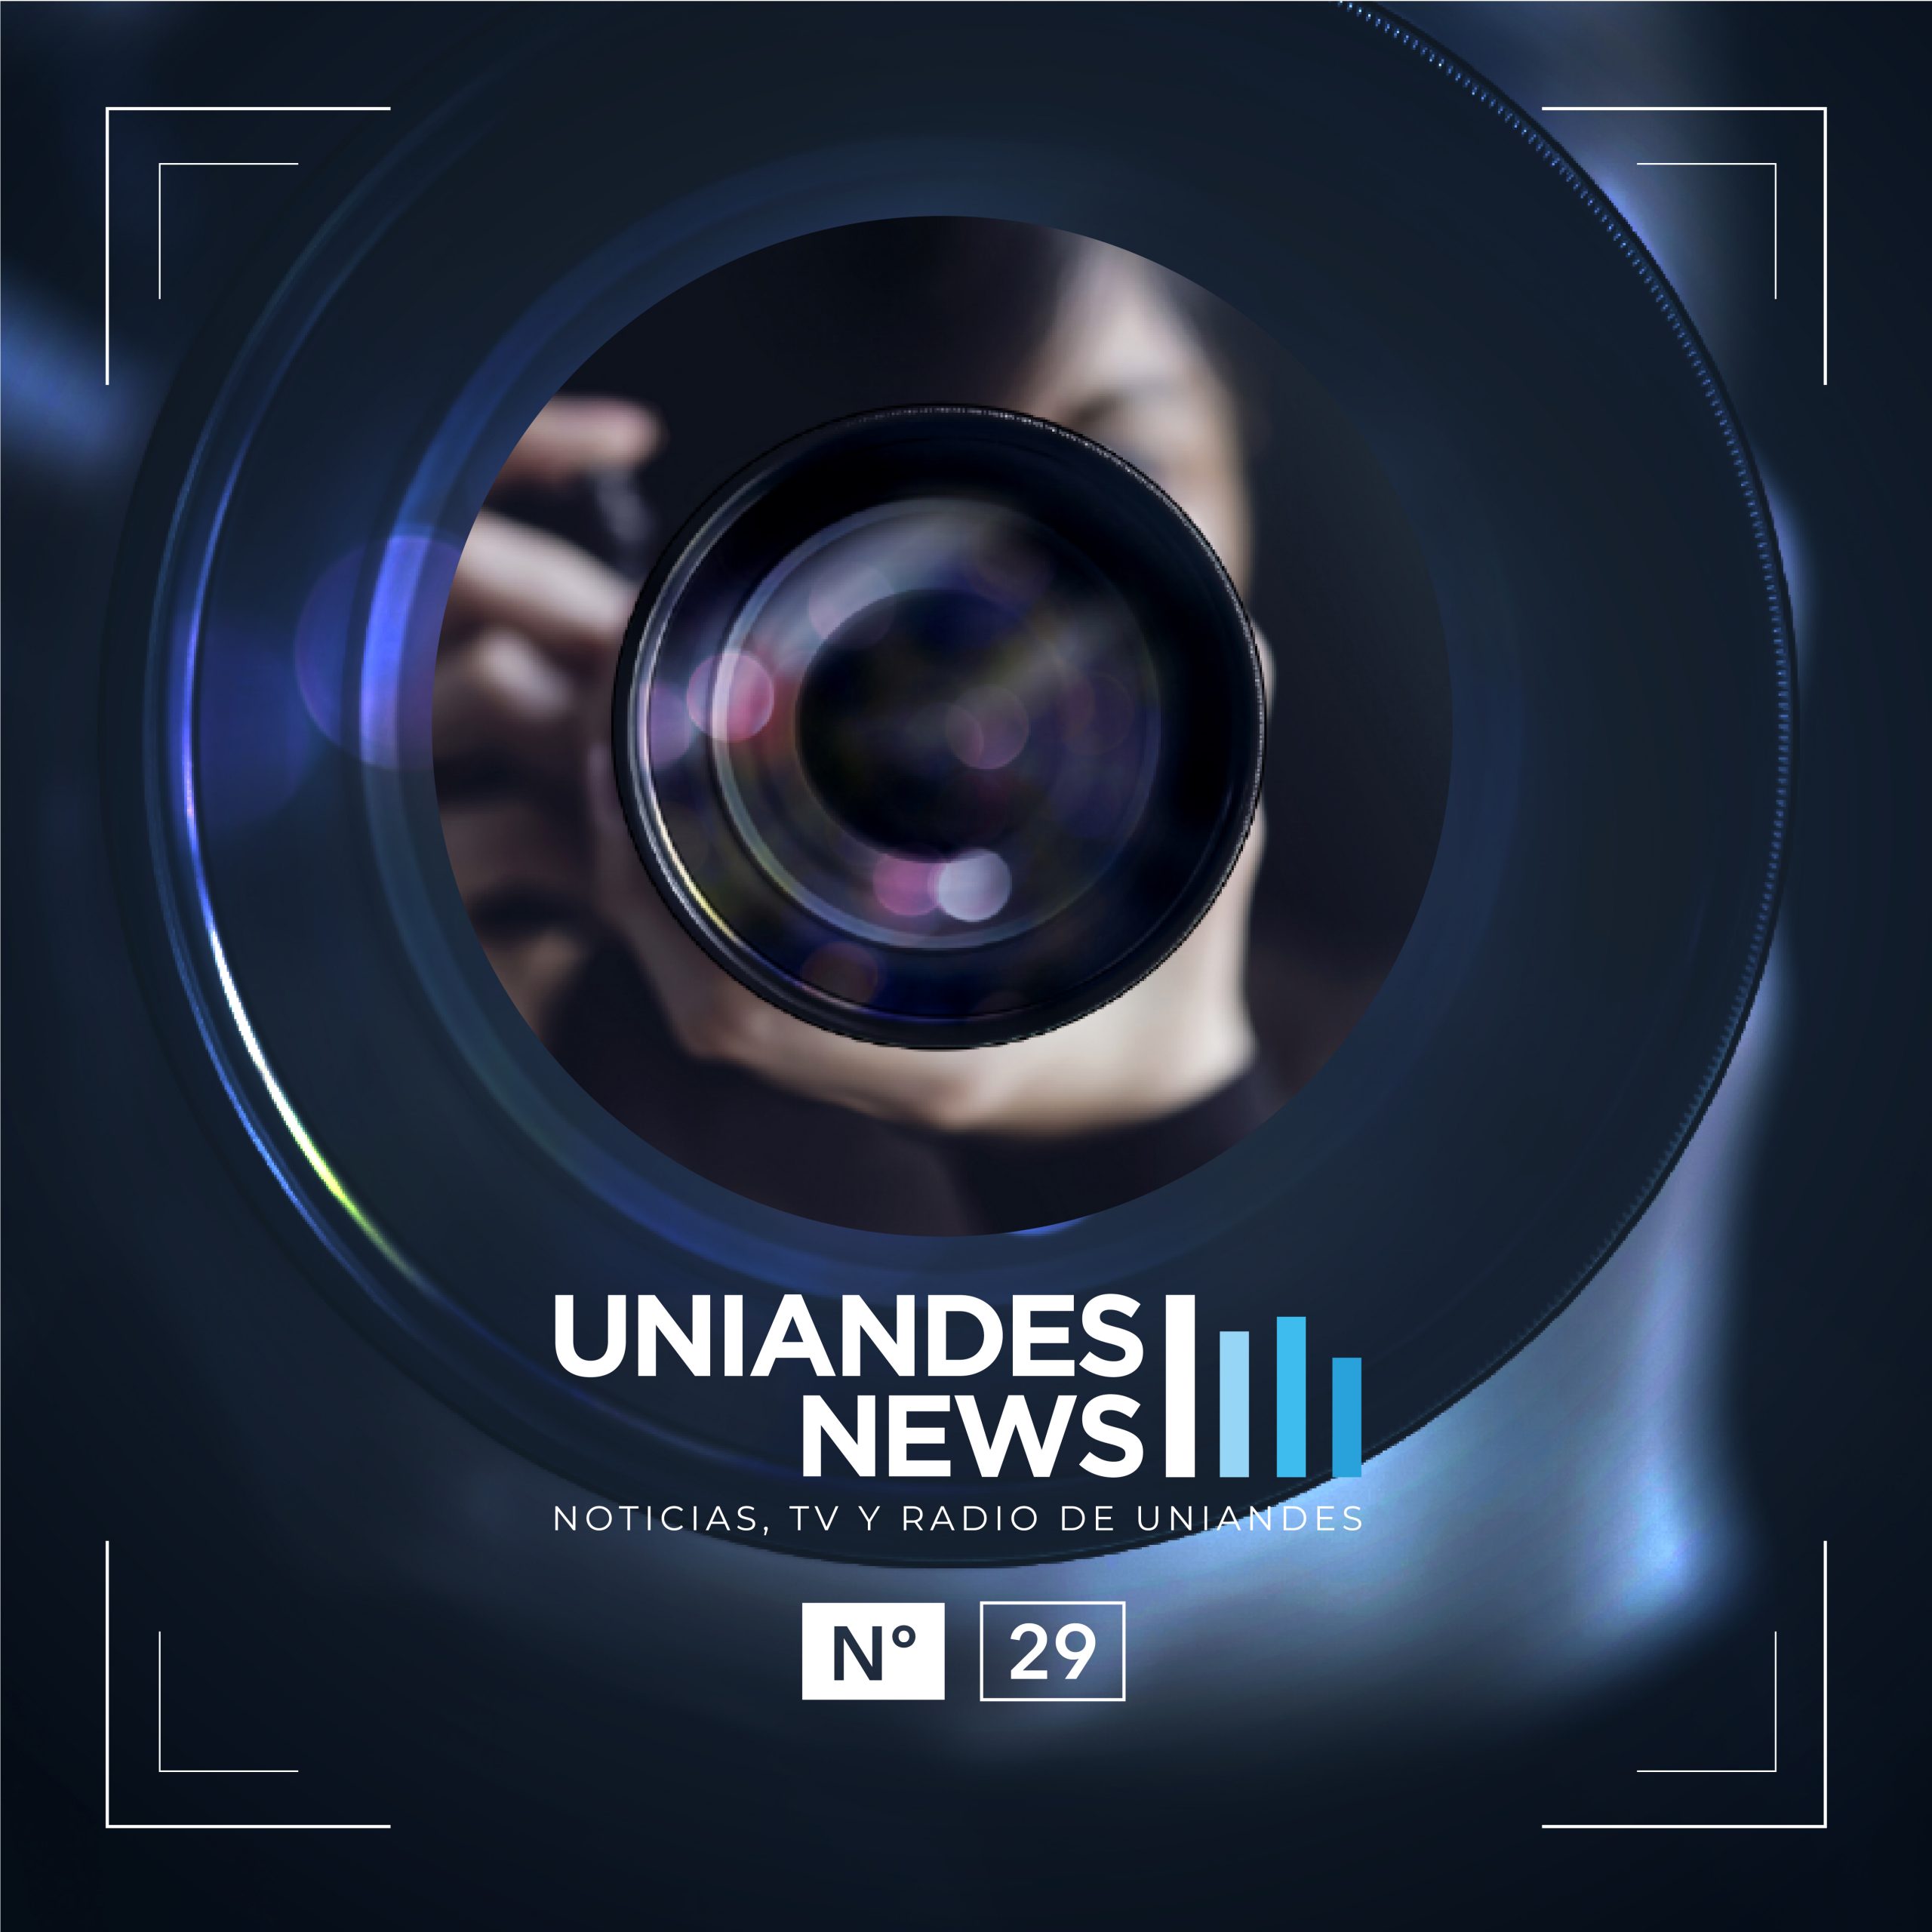 Uniandes news 29